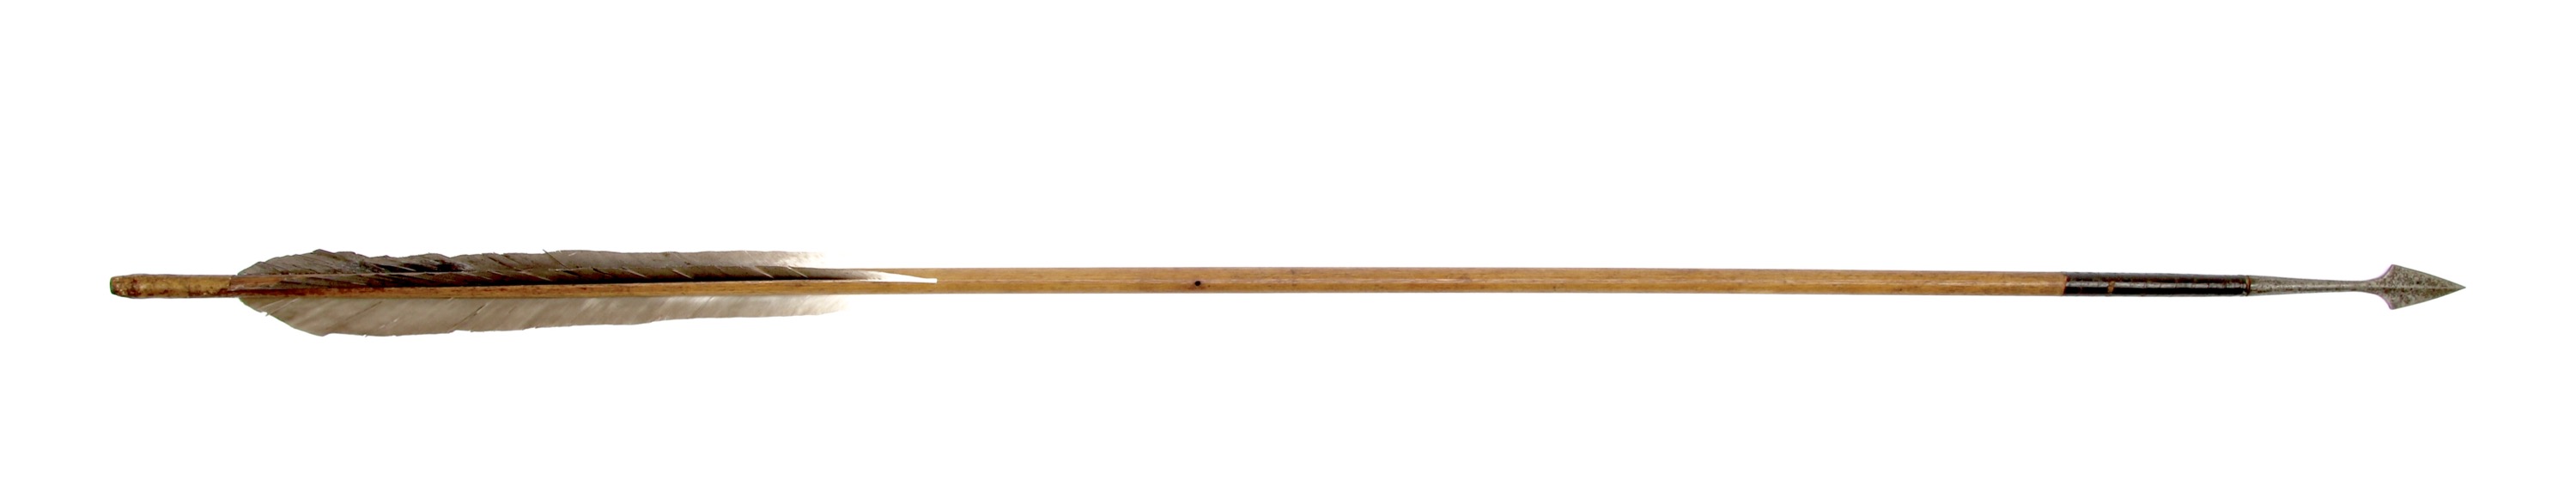 Qing war arrow